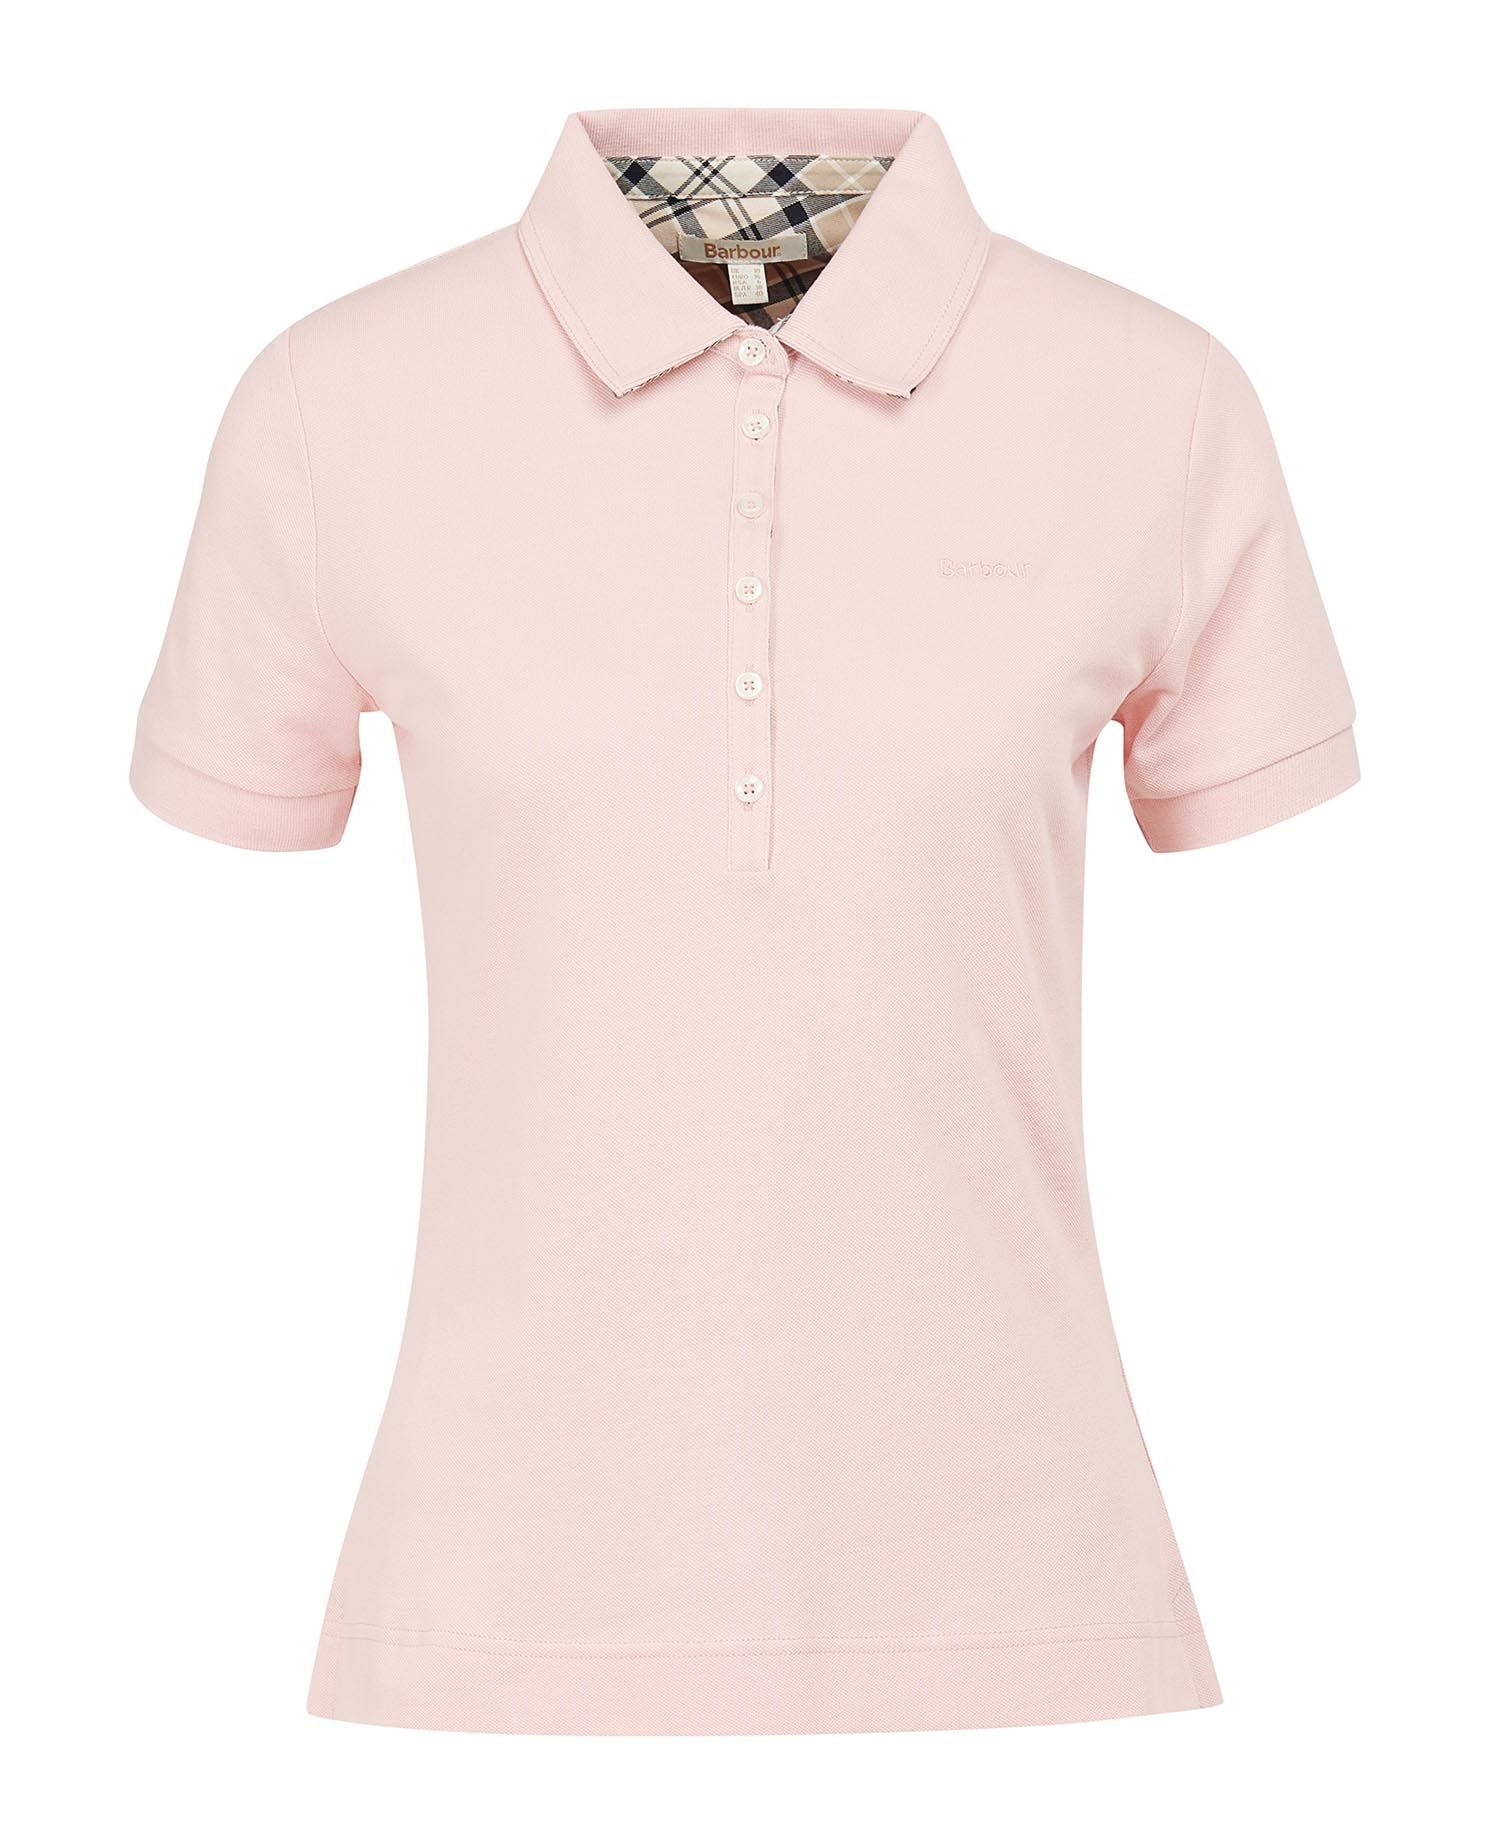 Barbour Portsdown Polo Shirt - Pink/ Indigo Tartan